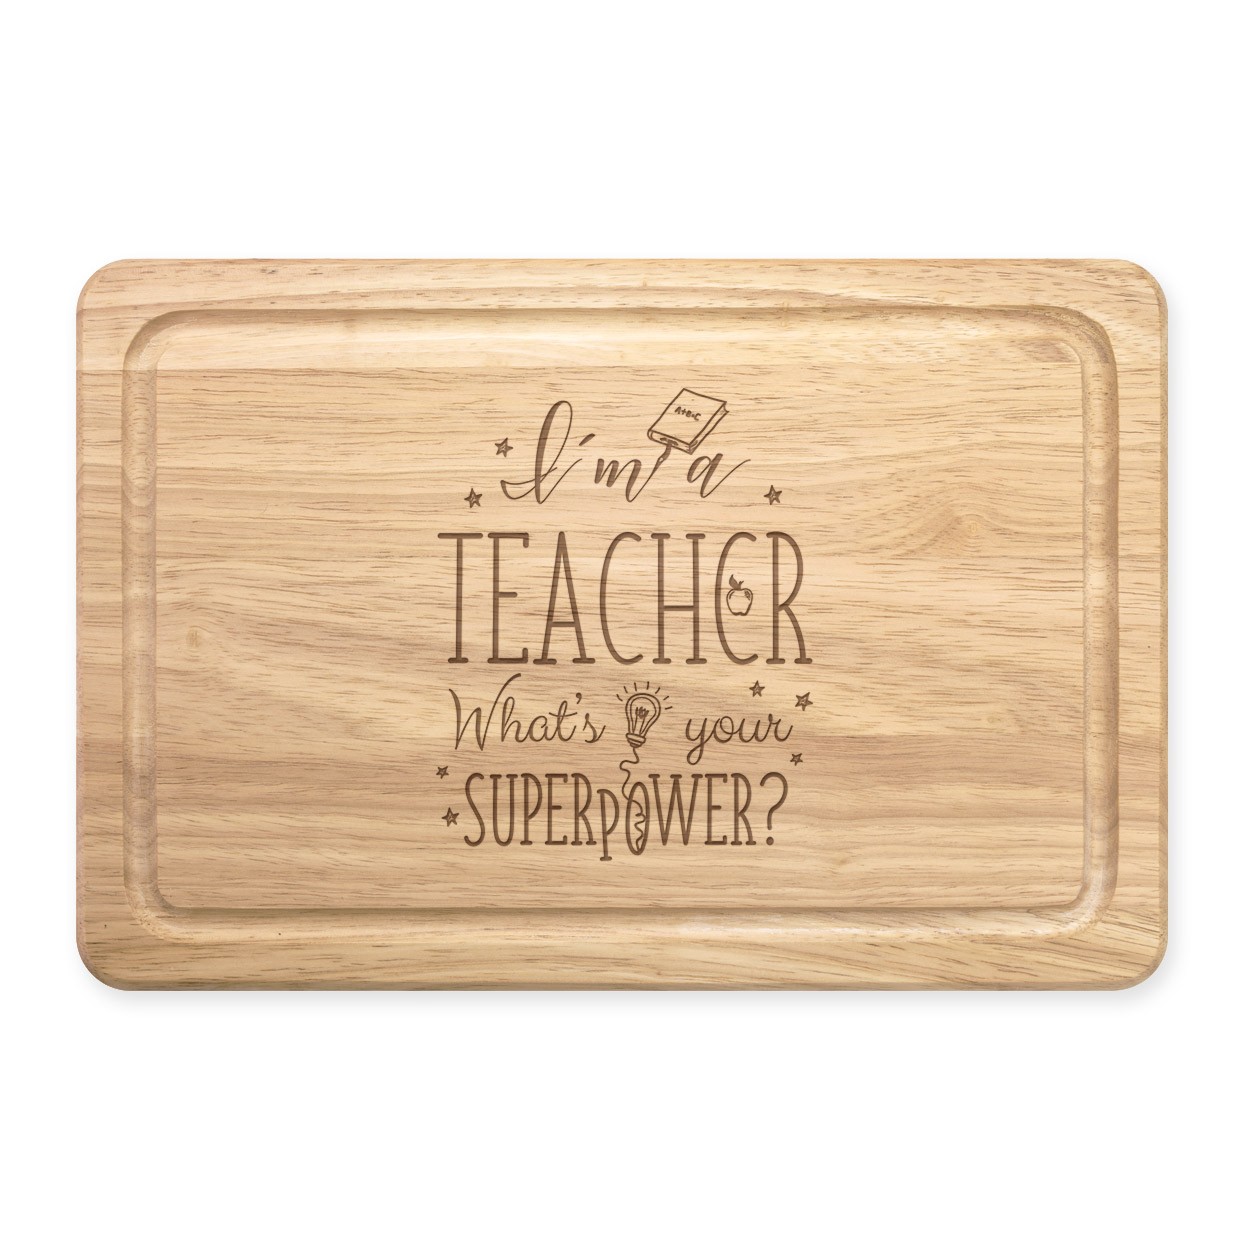 I'm A Teacher What's Your Superpower Rectangular Wooden Chopping Board